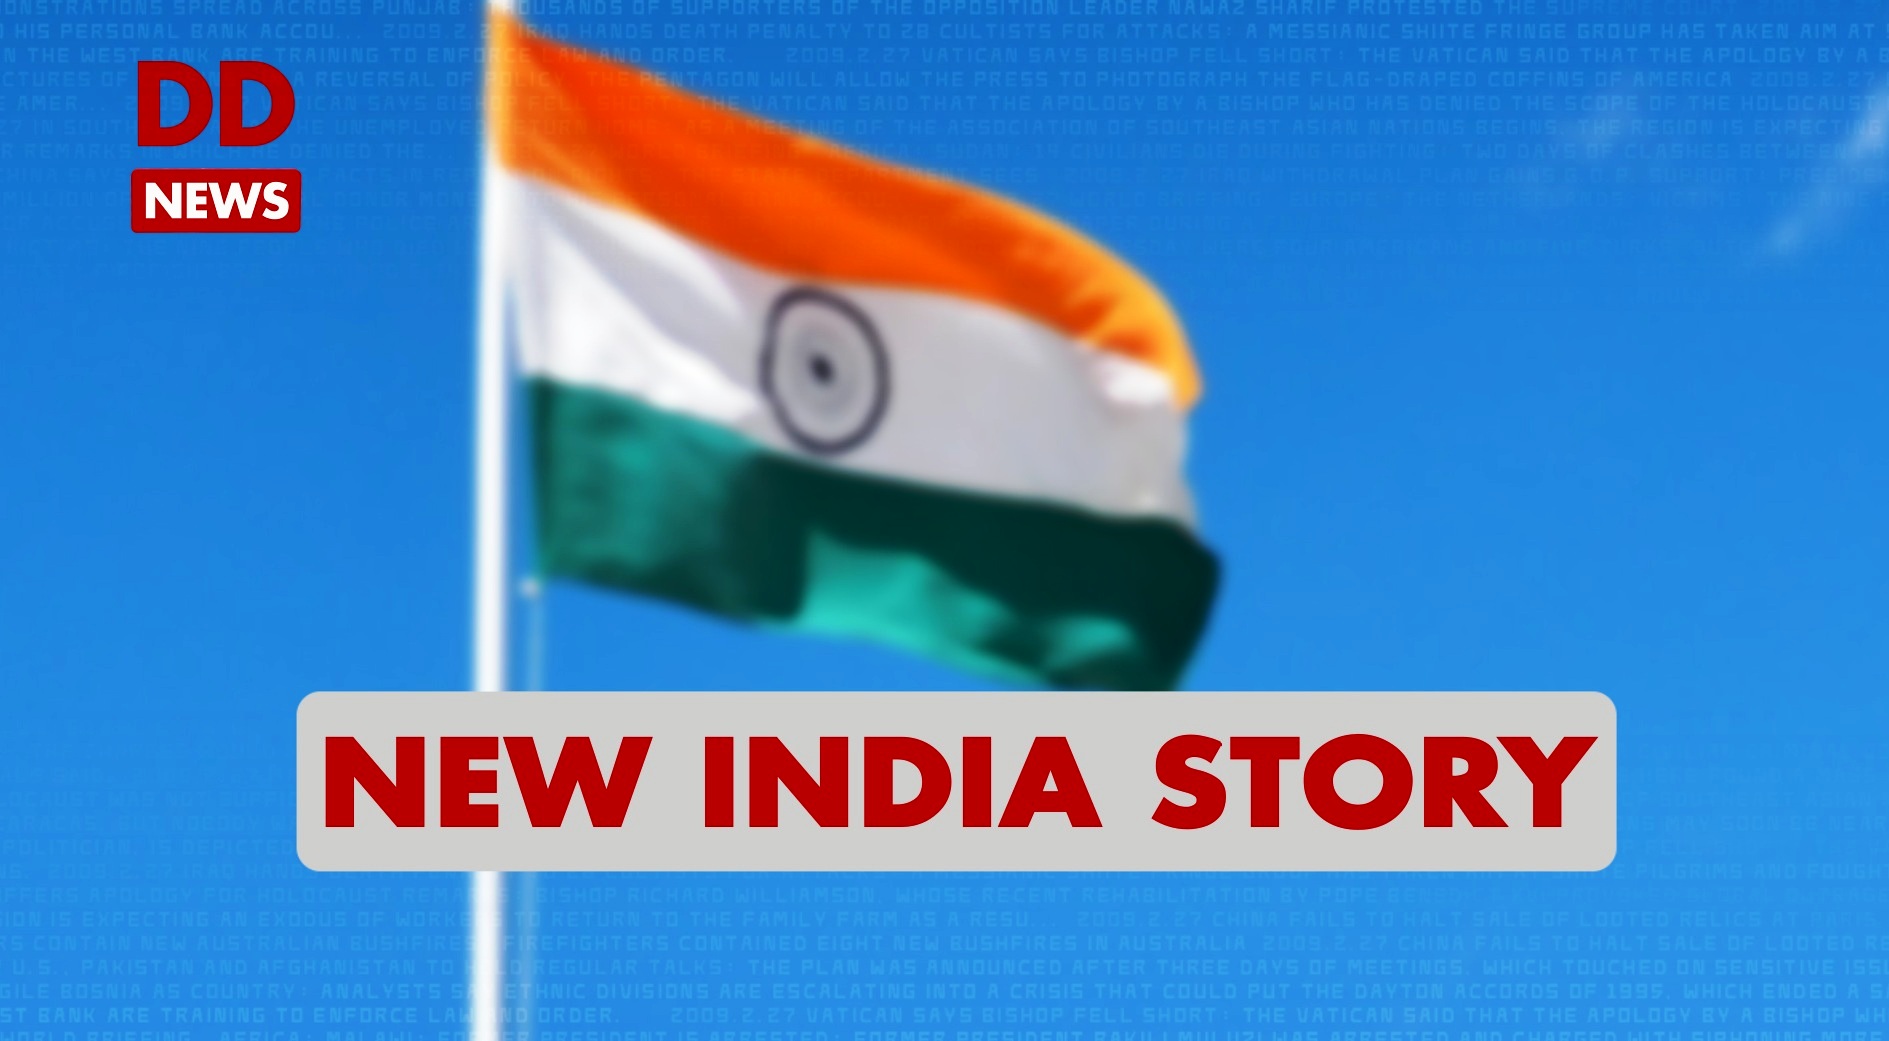 New India Story / Tamil Nadu / Dindigul / Mission Indradhanush